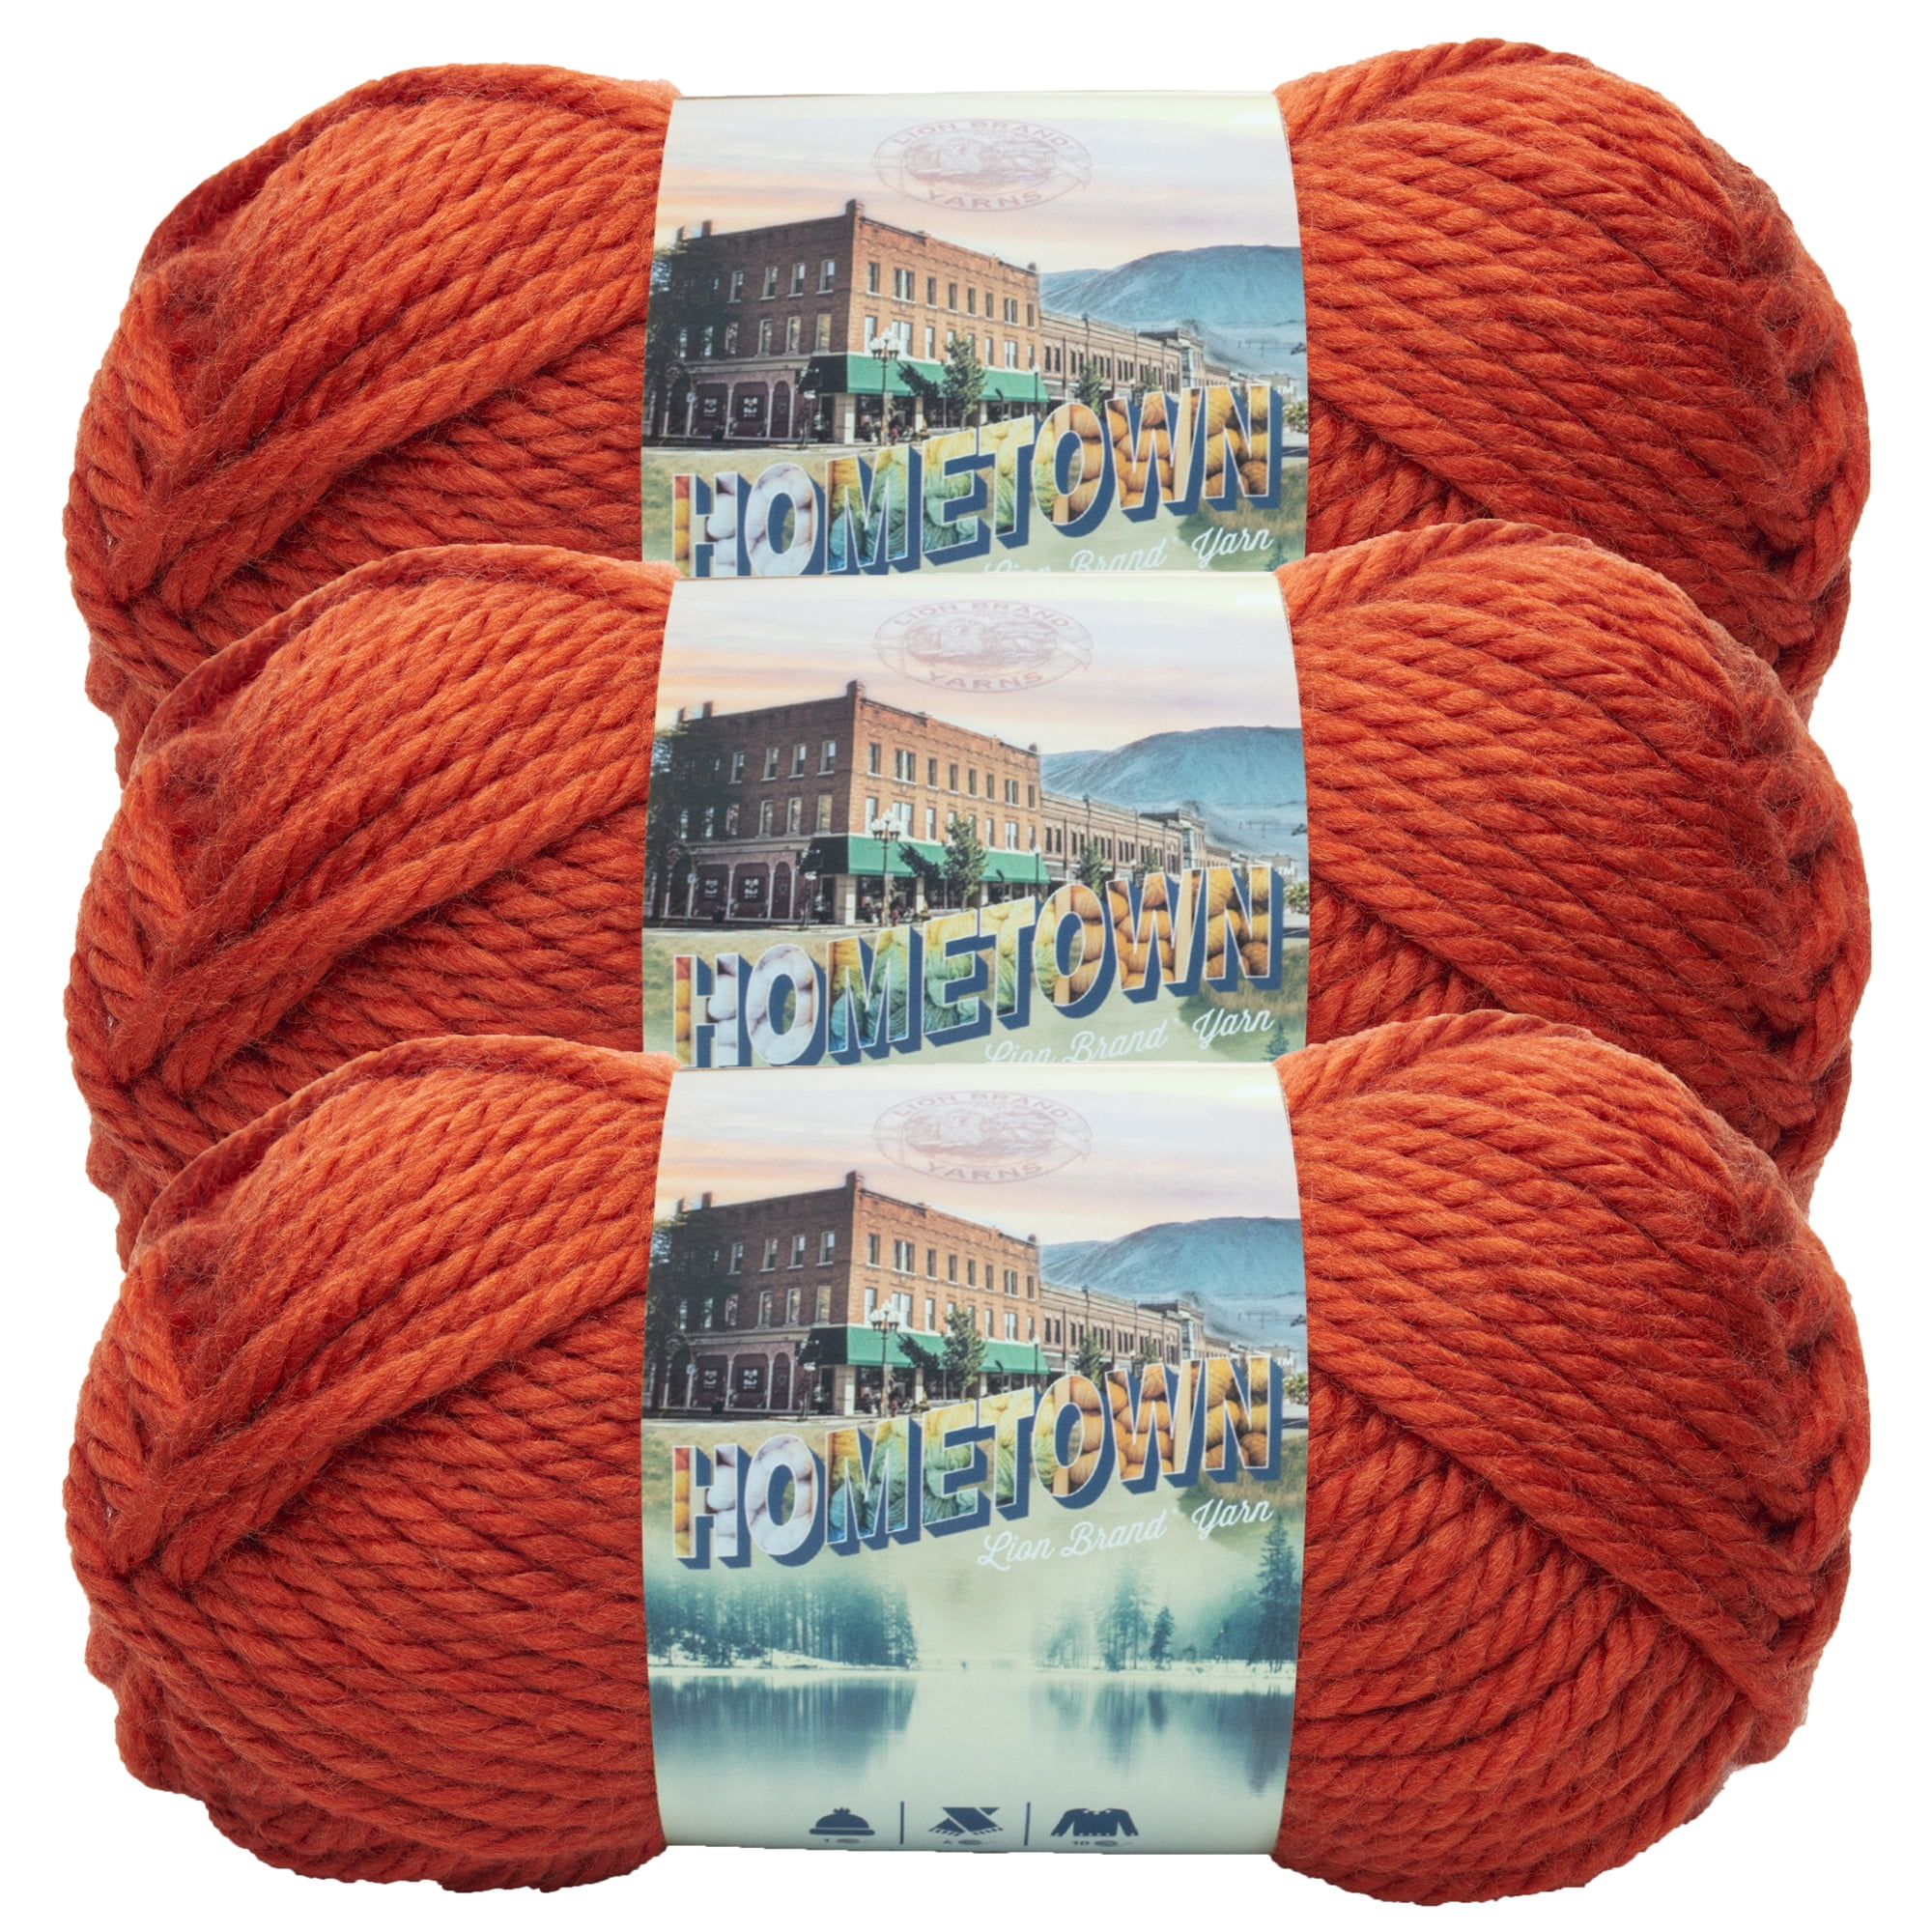 Lion Brand Yarns Hometown USA Yarn - Brick Red Orange, 1 ct